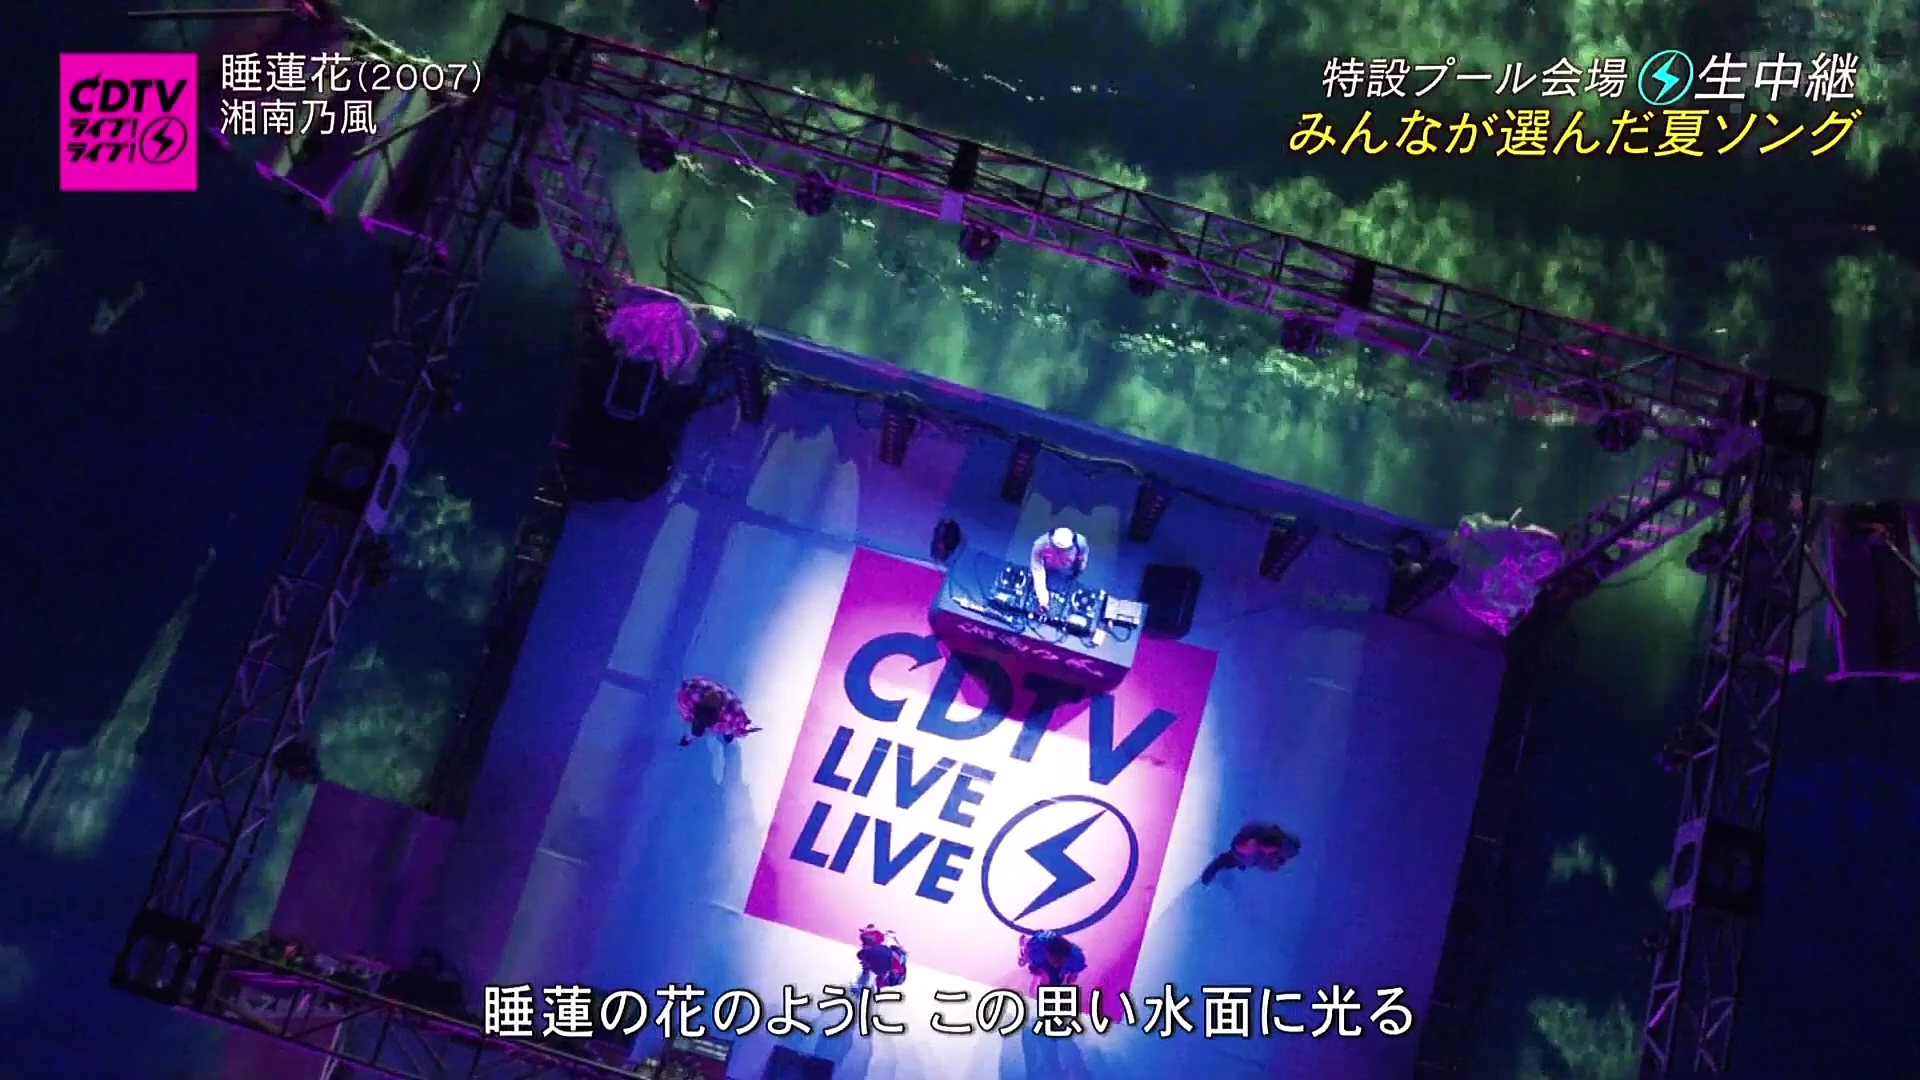 湘南乃風睡蓮花 Cdtv Live Live 08 10 哔哩哔哩 つロ干杯 Bilibili